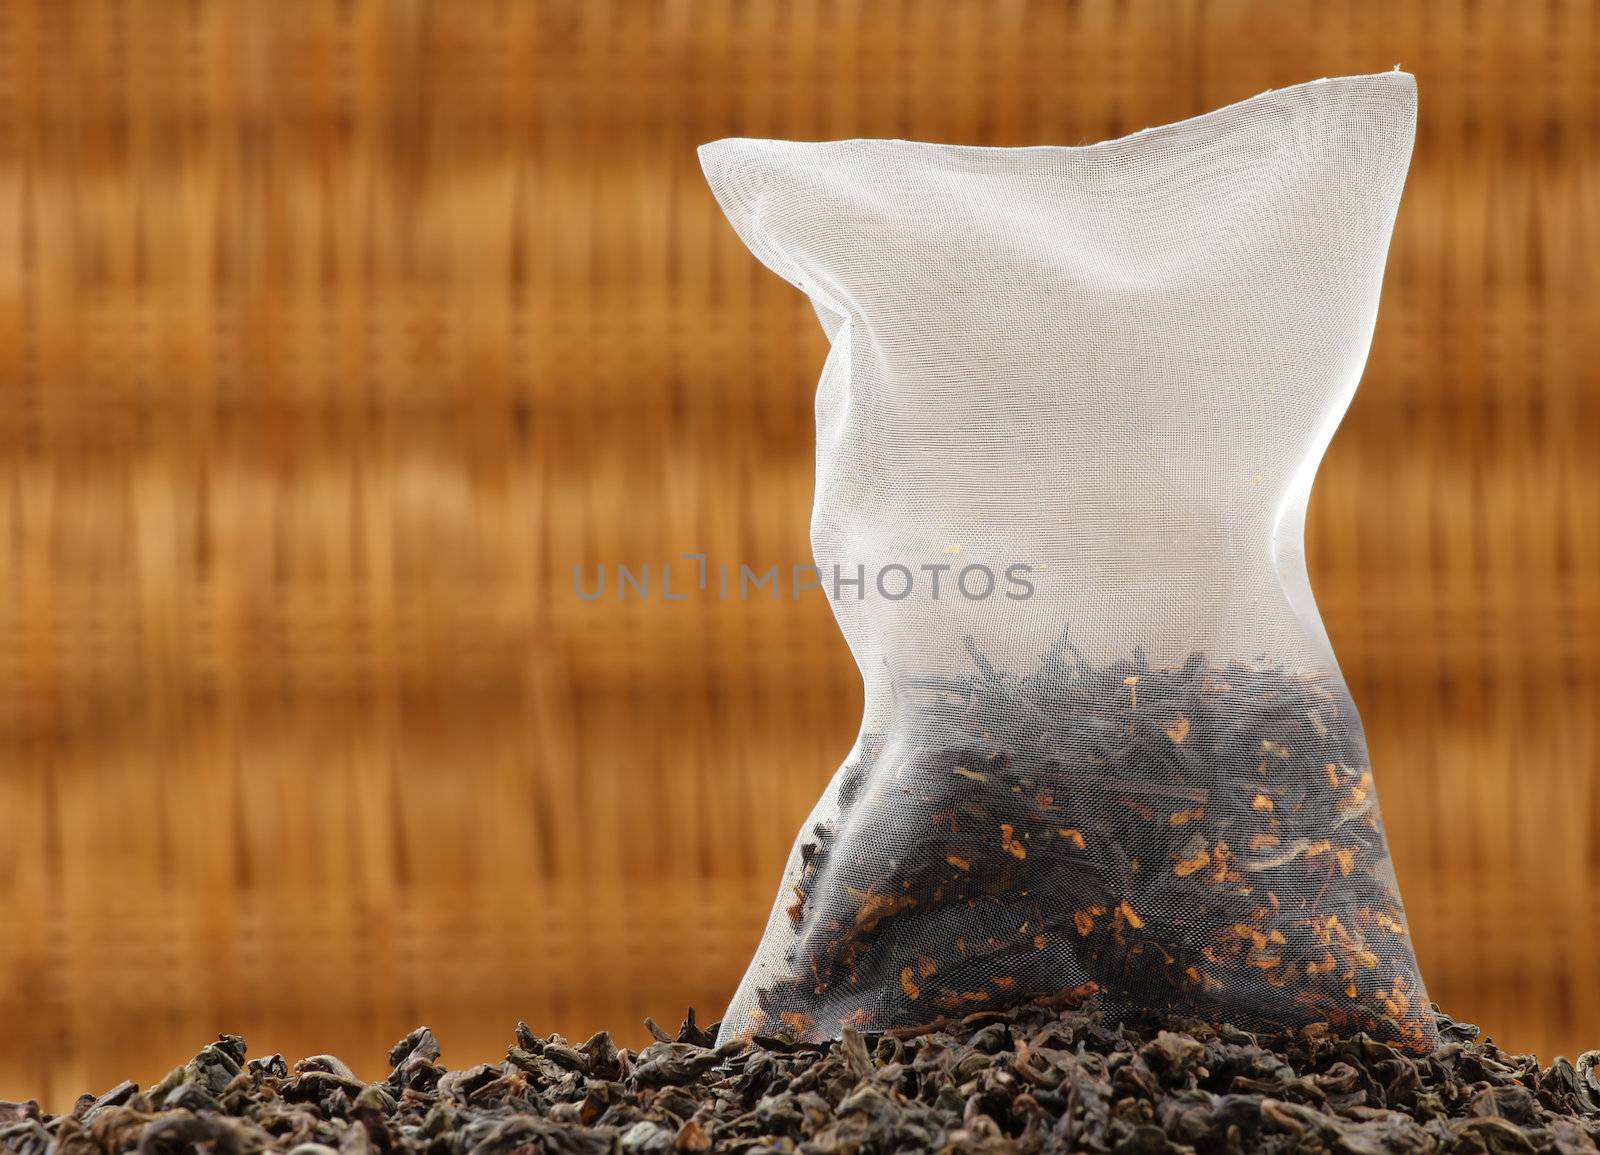 Corn silk tea bag by carterphoto